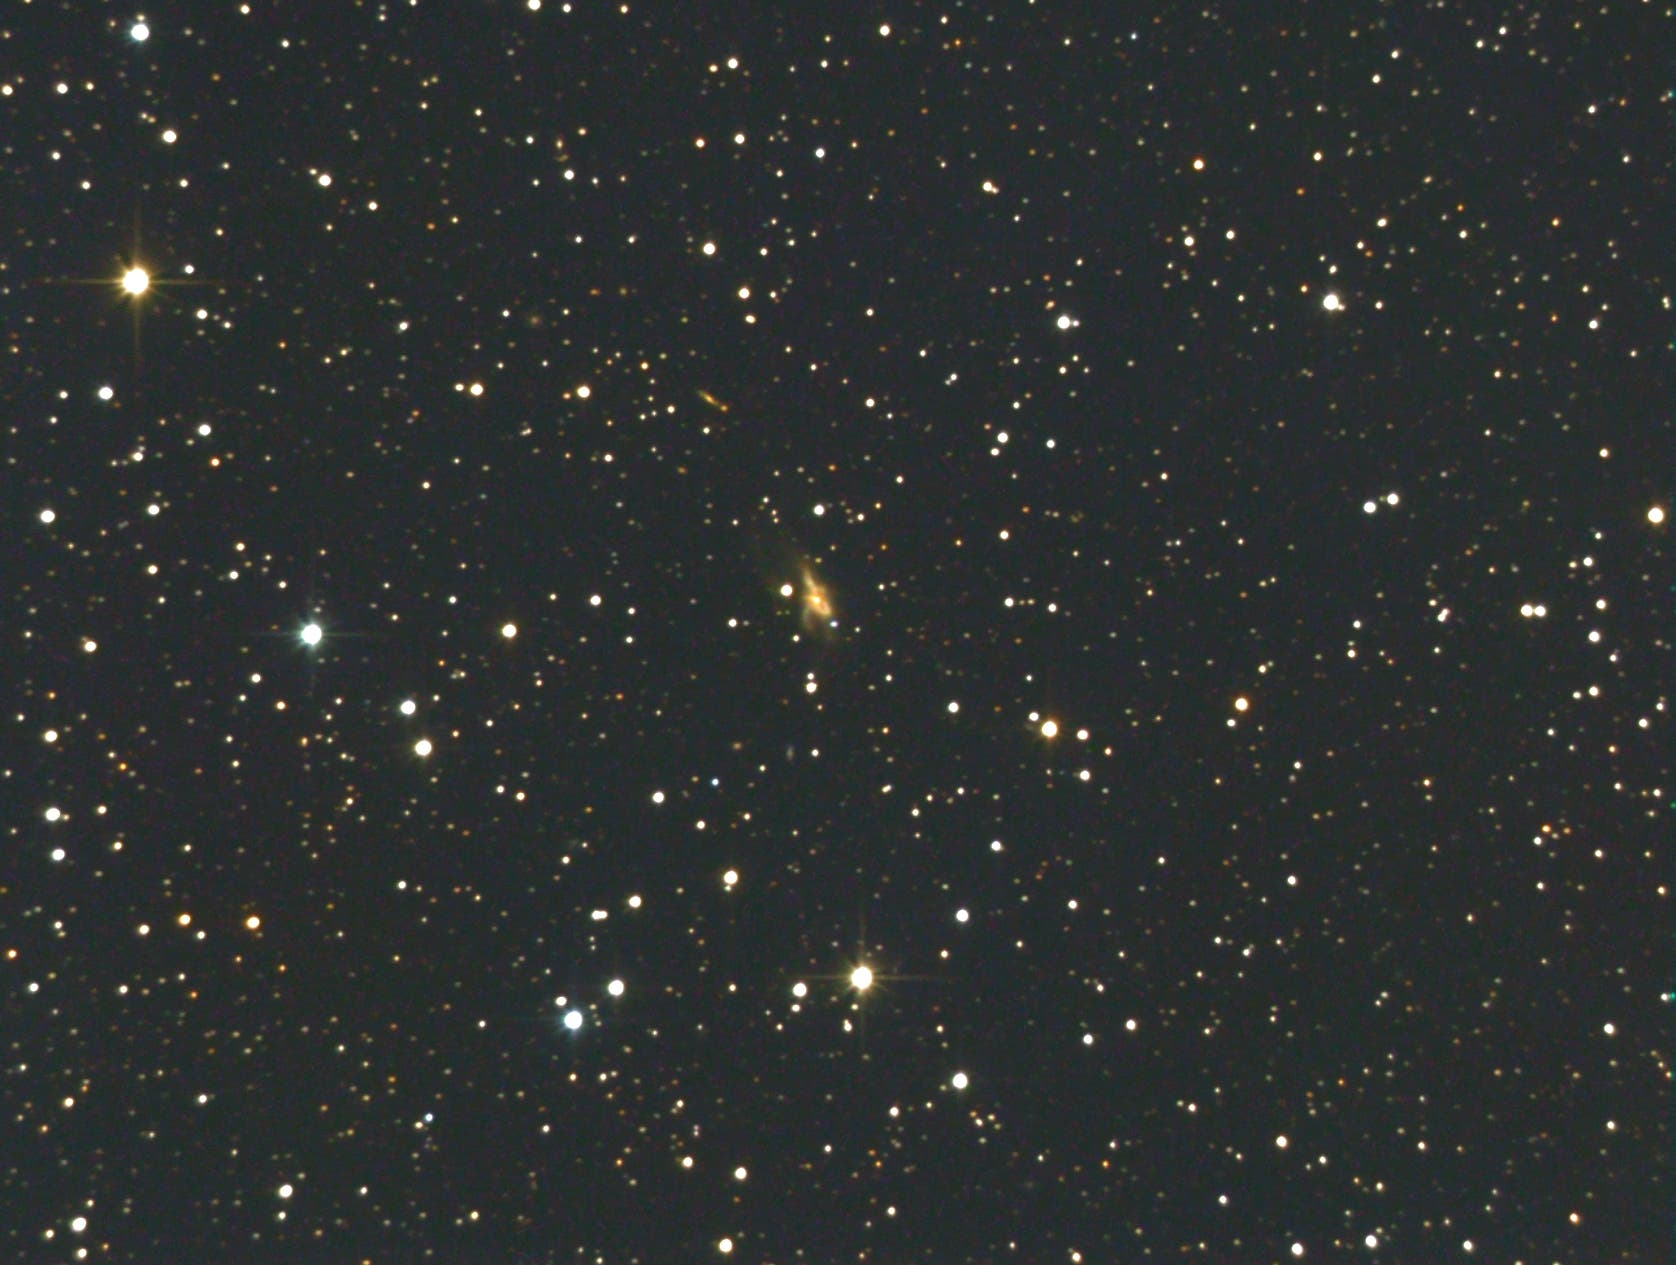 NGC 6240  "Starfish Galaxy" in Ophiuchus